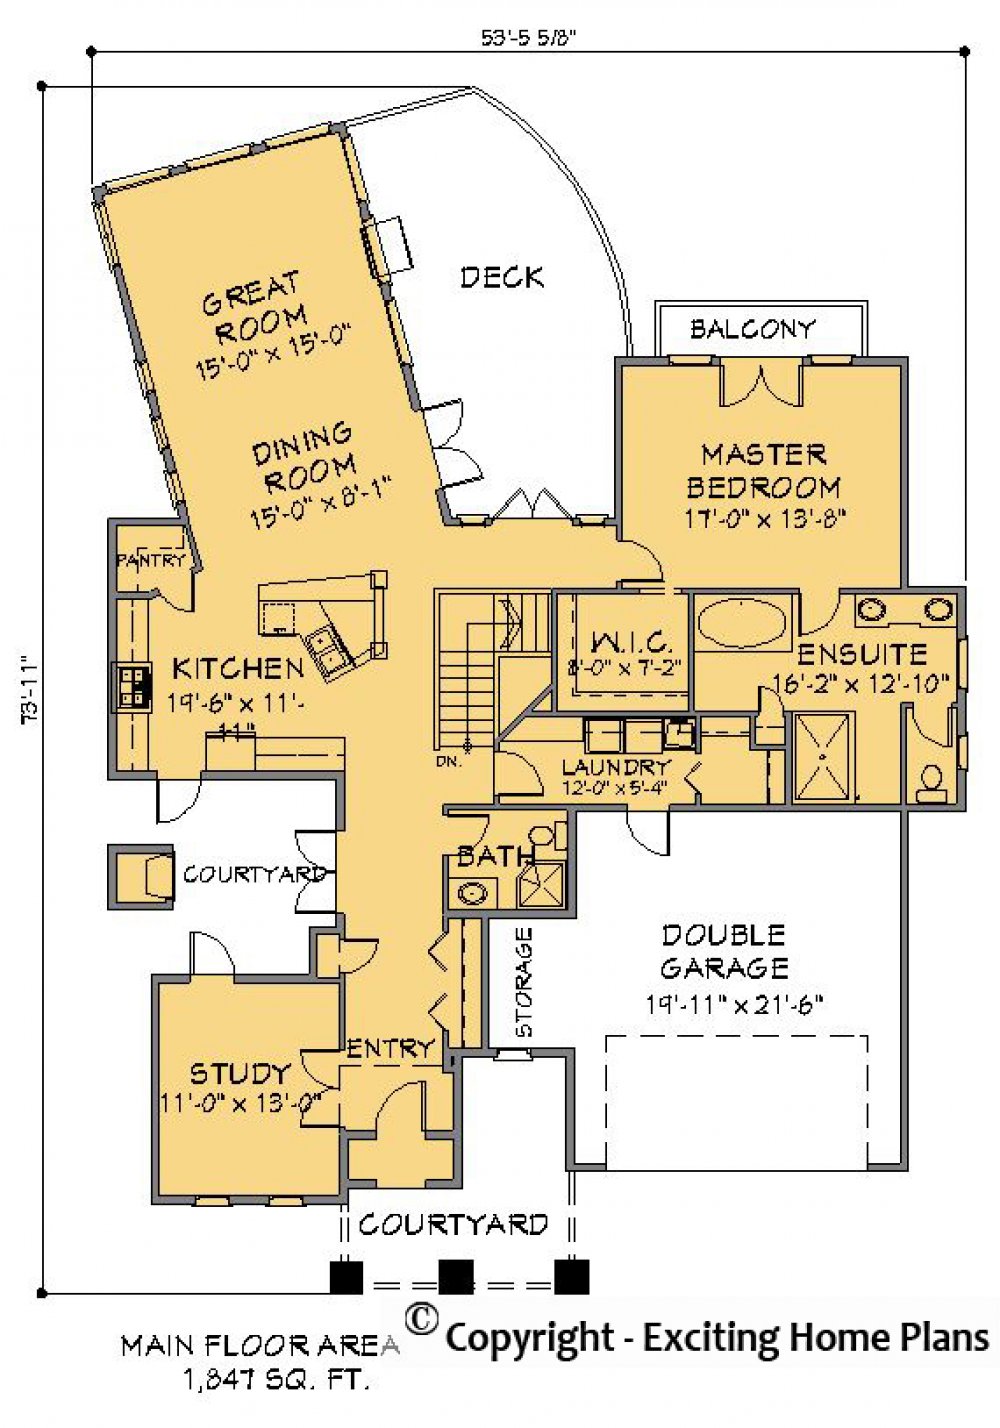 House Plan E1407-10 Main Floor Plan